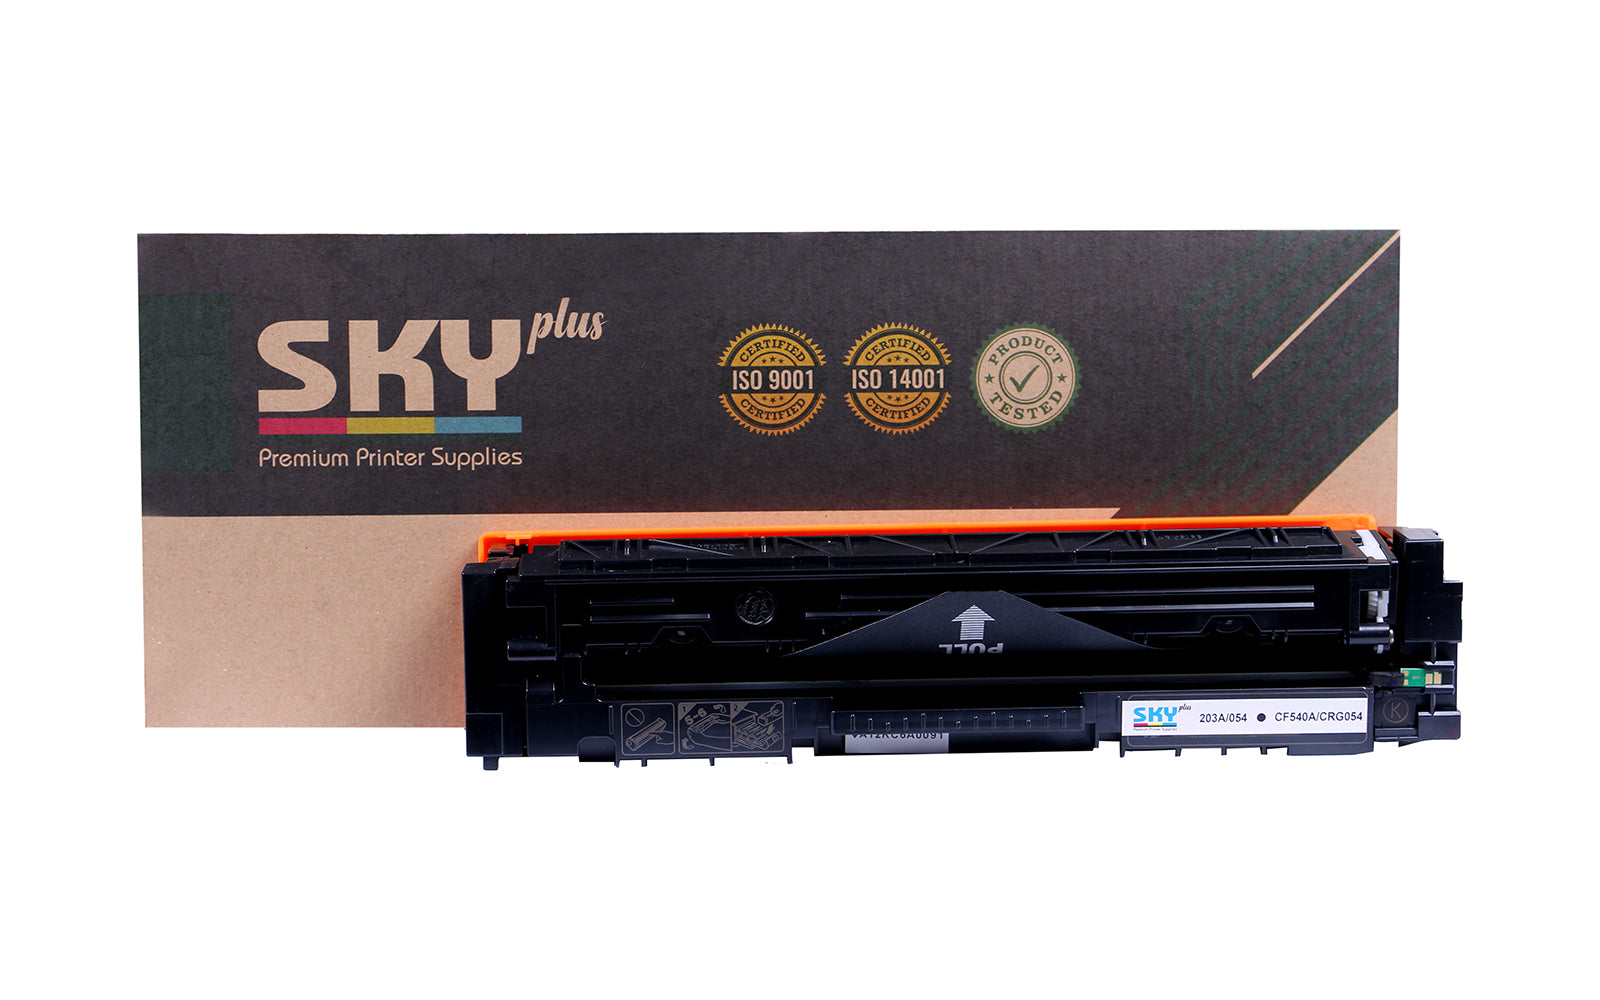 SKY Plus 054 Remanufactured Toner Cartridge for Canon LBP620C and MF640c MF645cx Series